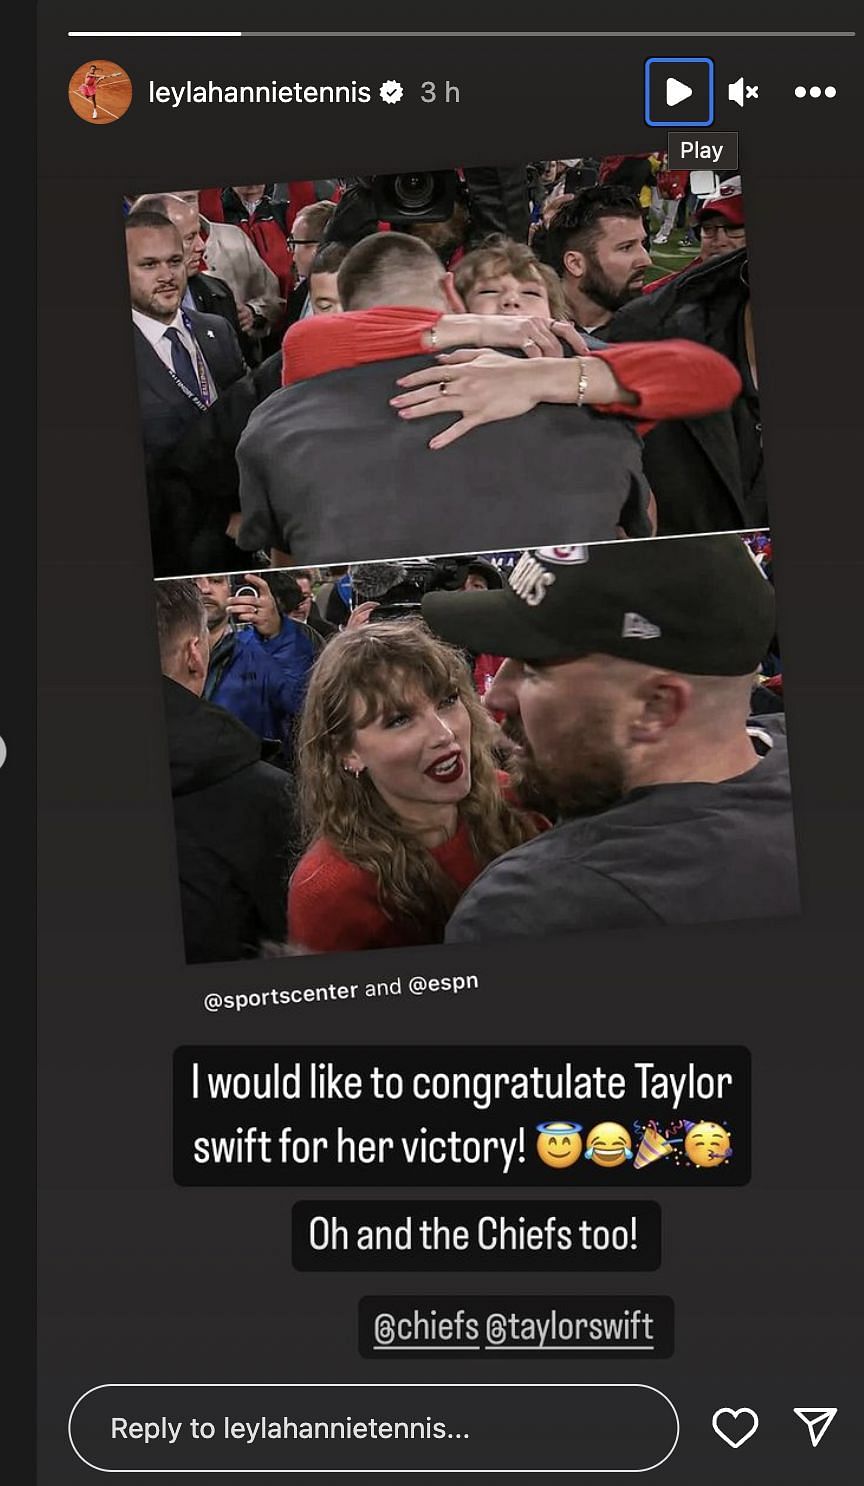 Taylor Swift is congratulated by Leylah Fernandez on social media